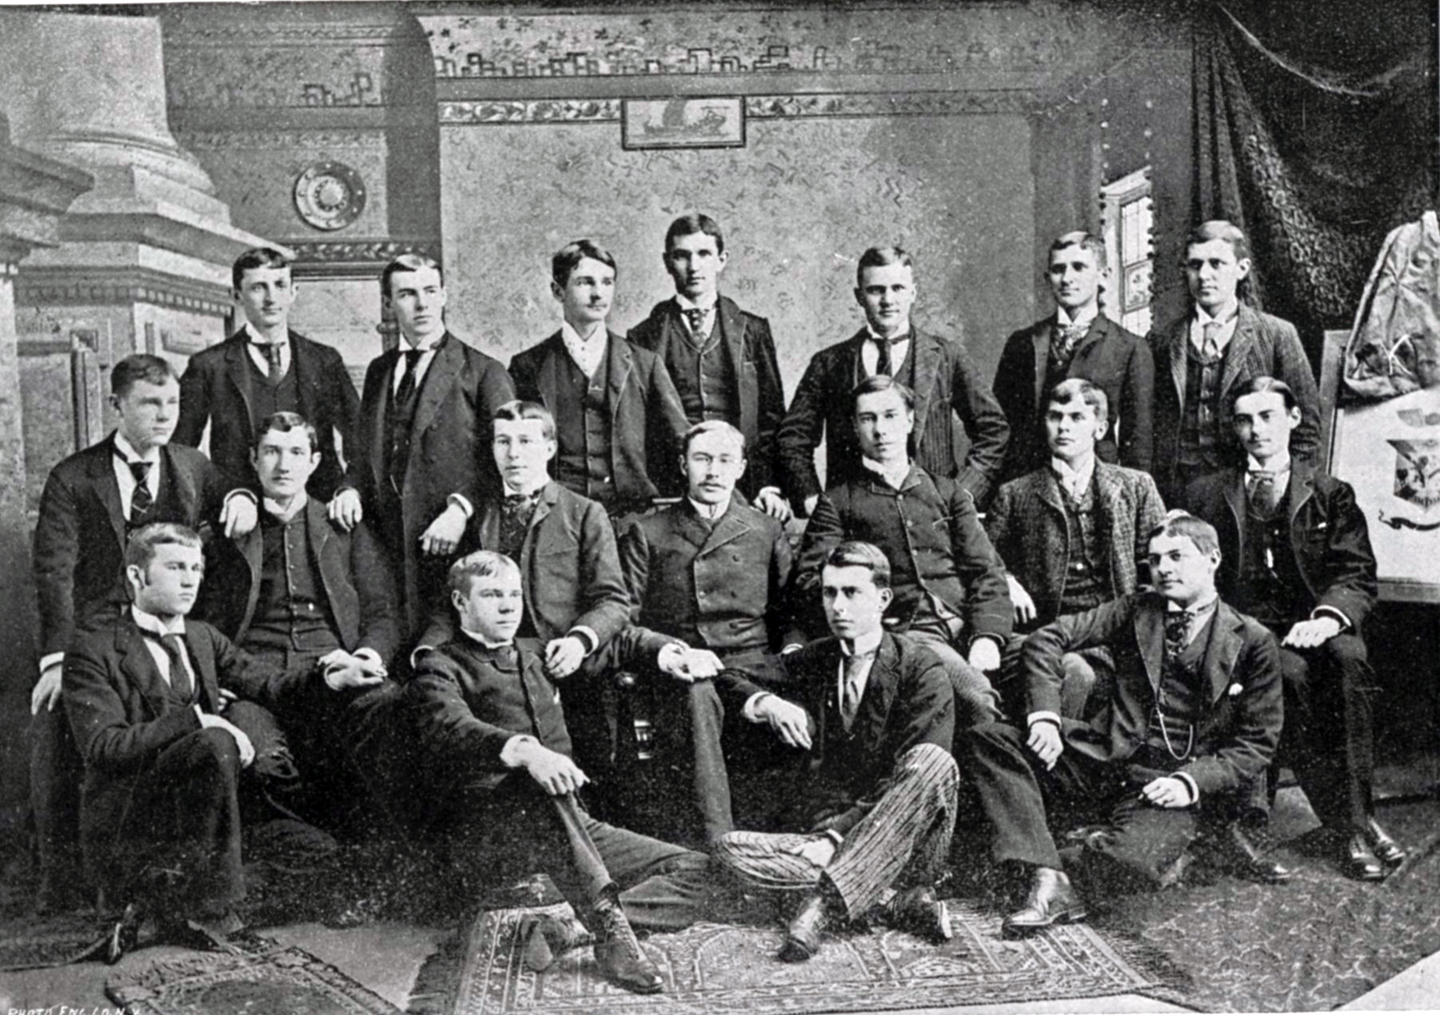 The brothers of Delta Kappa Epsilon in 1890